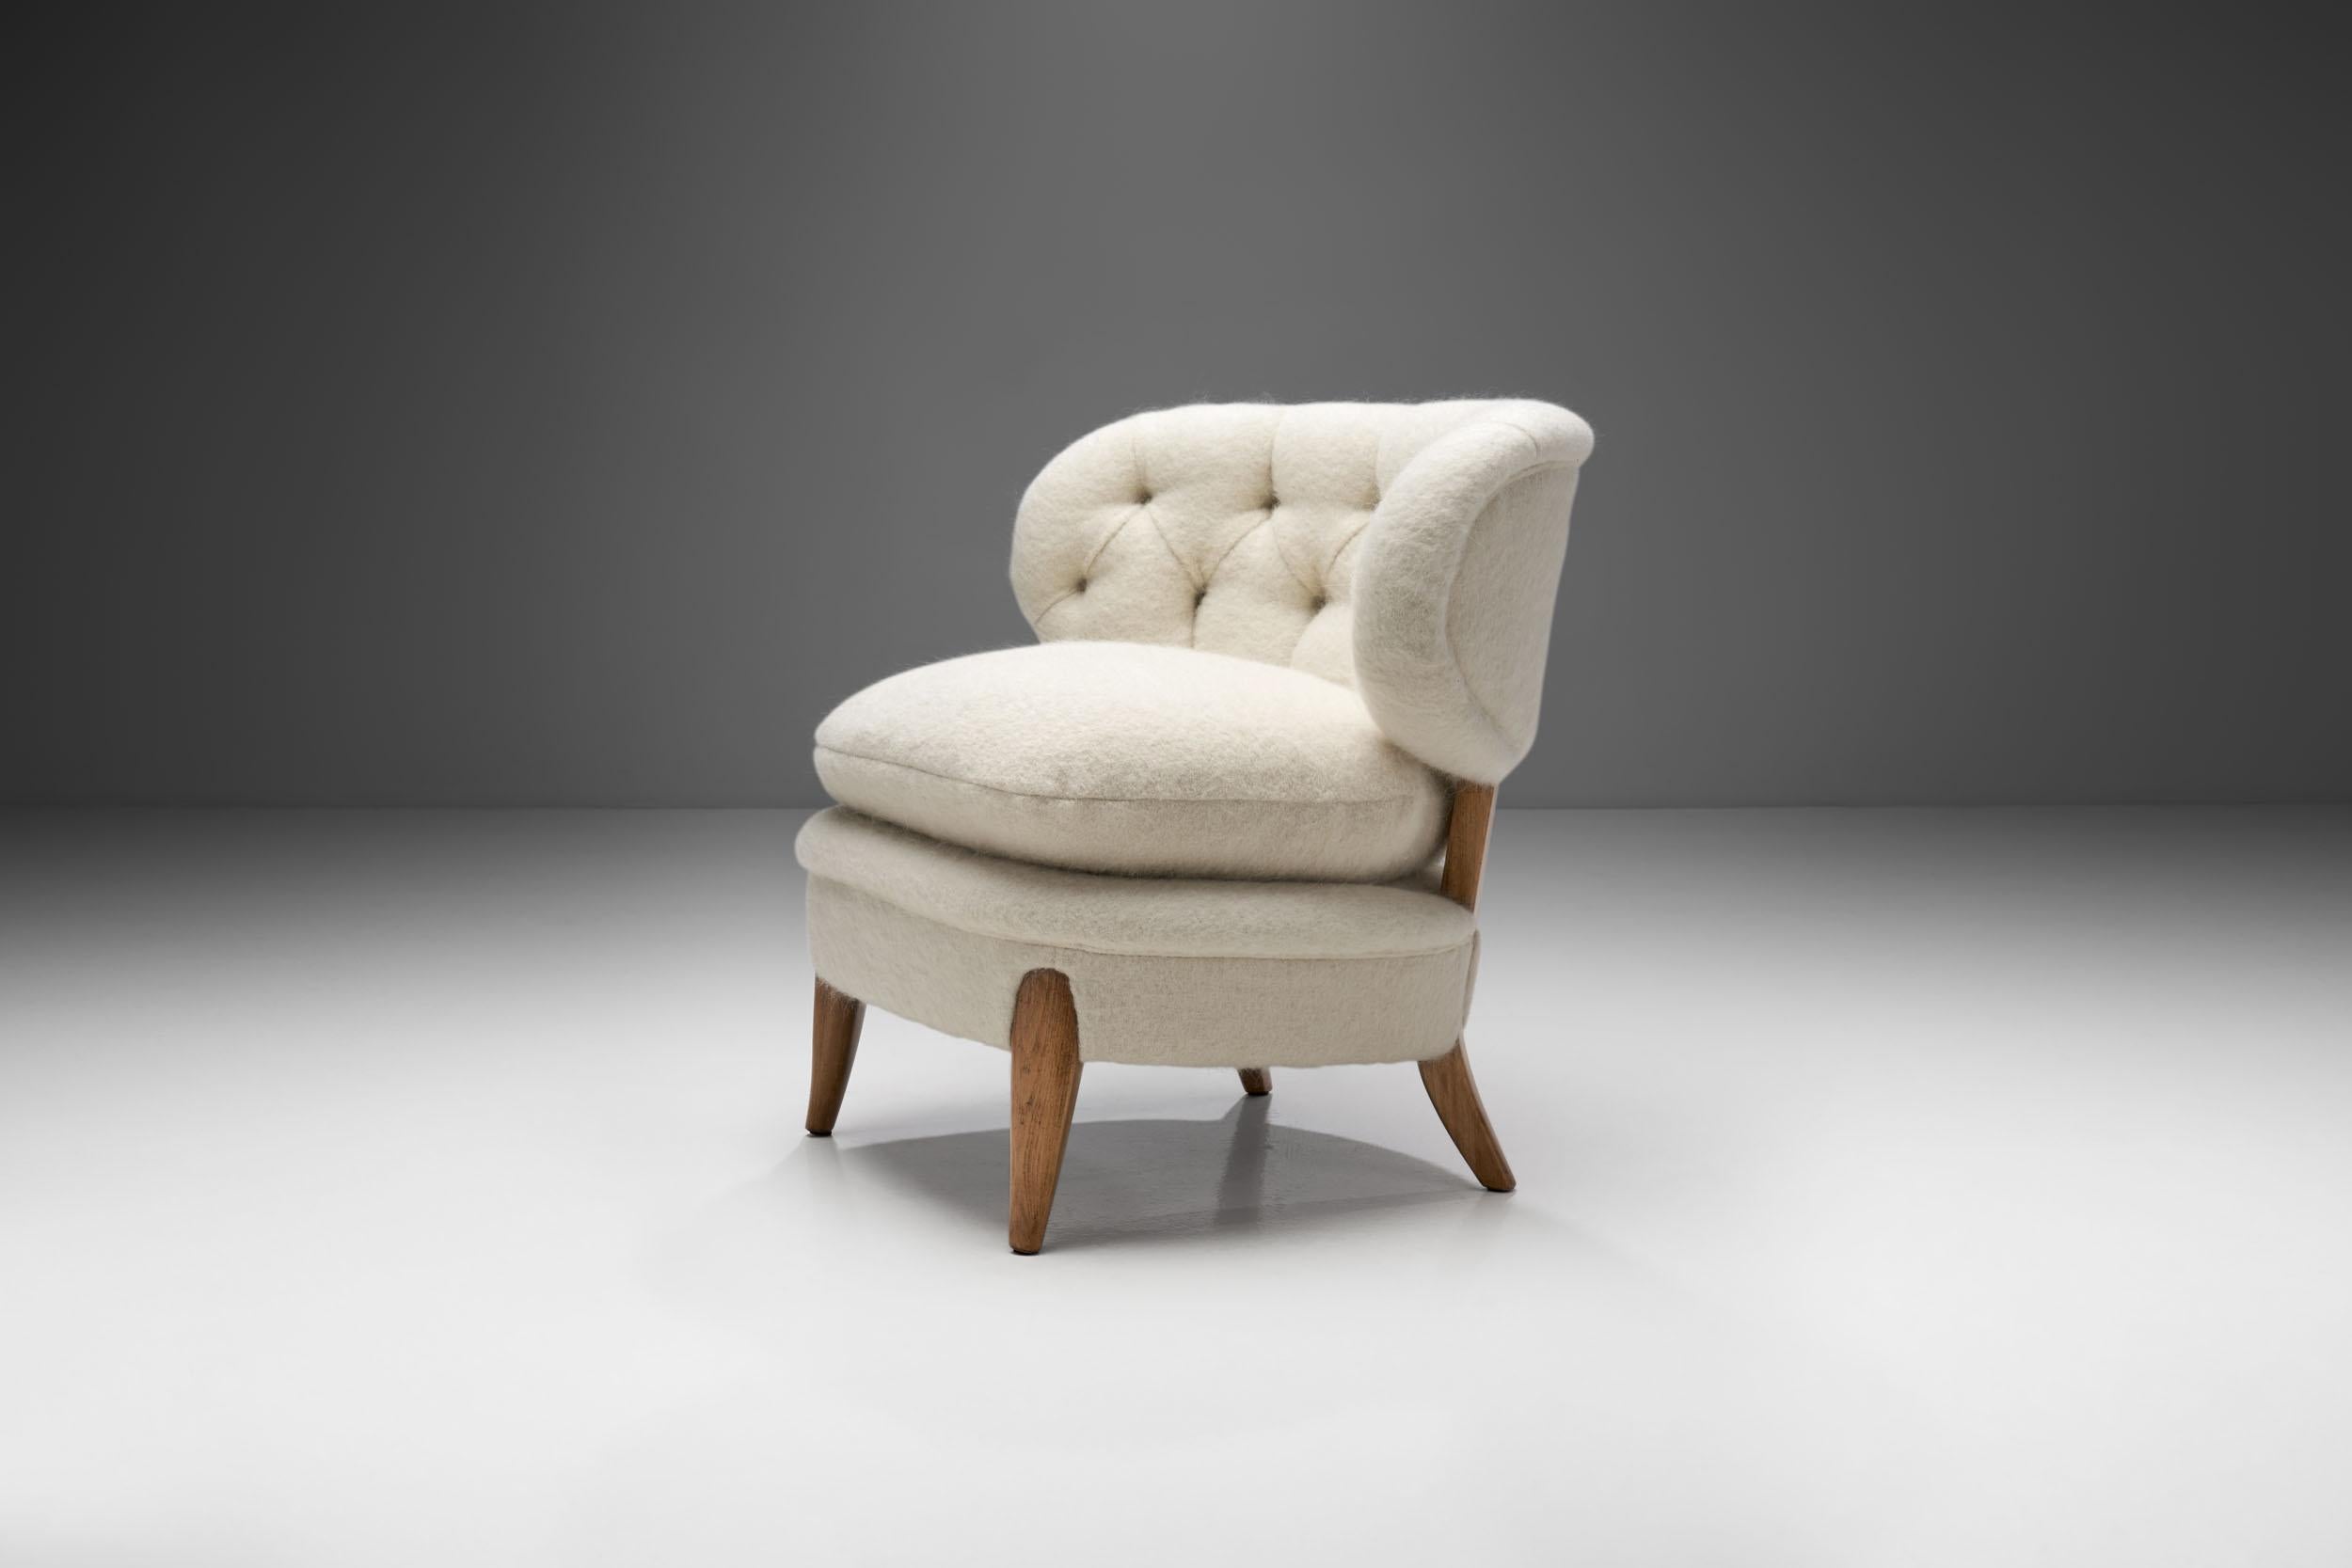 Swedish “Schulz” Lounge Chair by Otto Schulz for Jio Möbler Jönköping, Sweden, 1940s